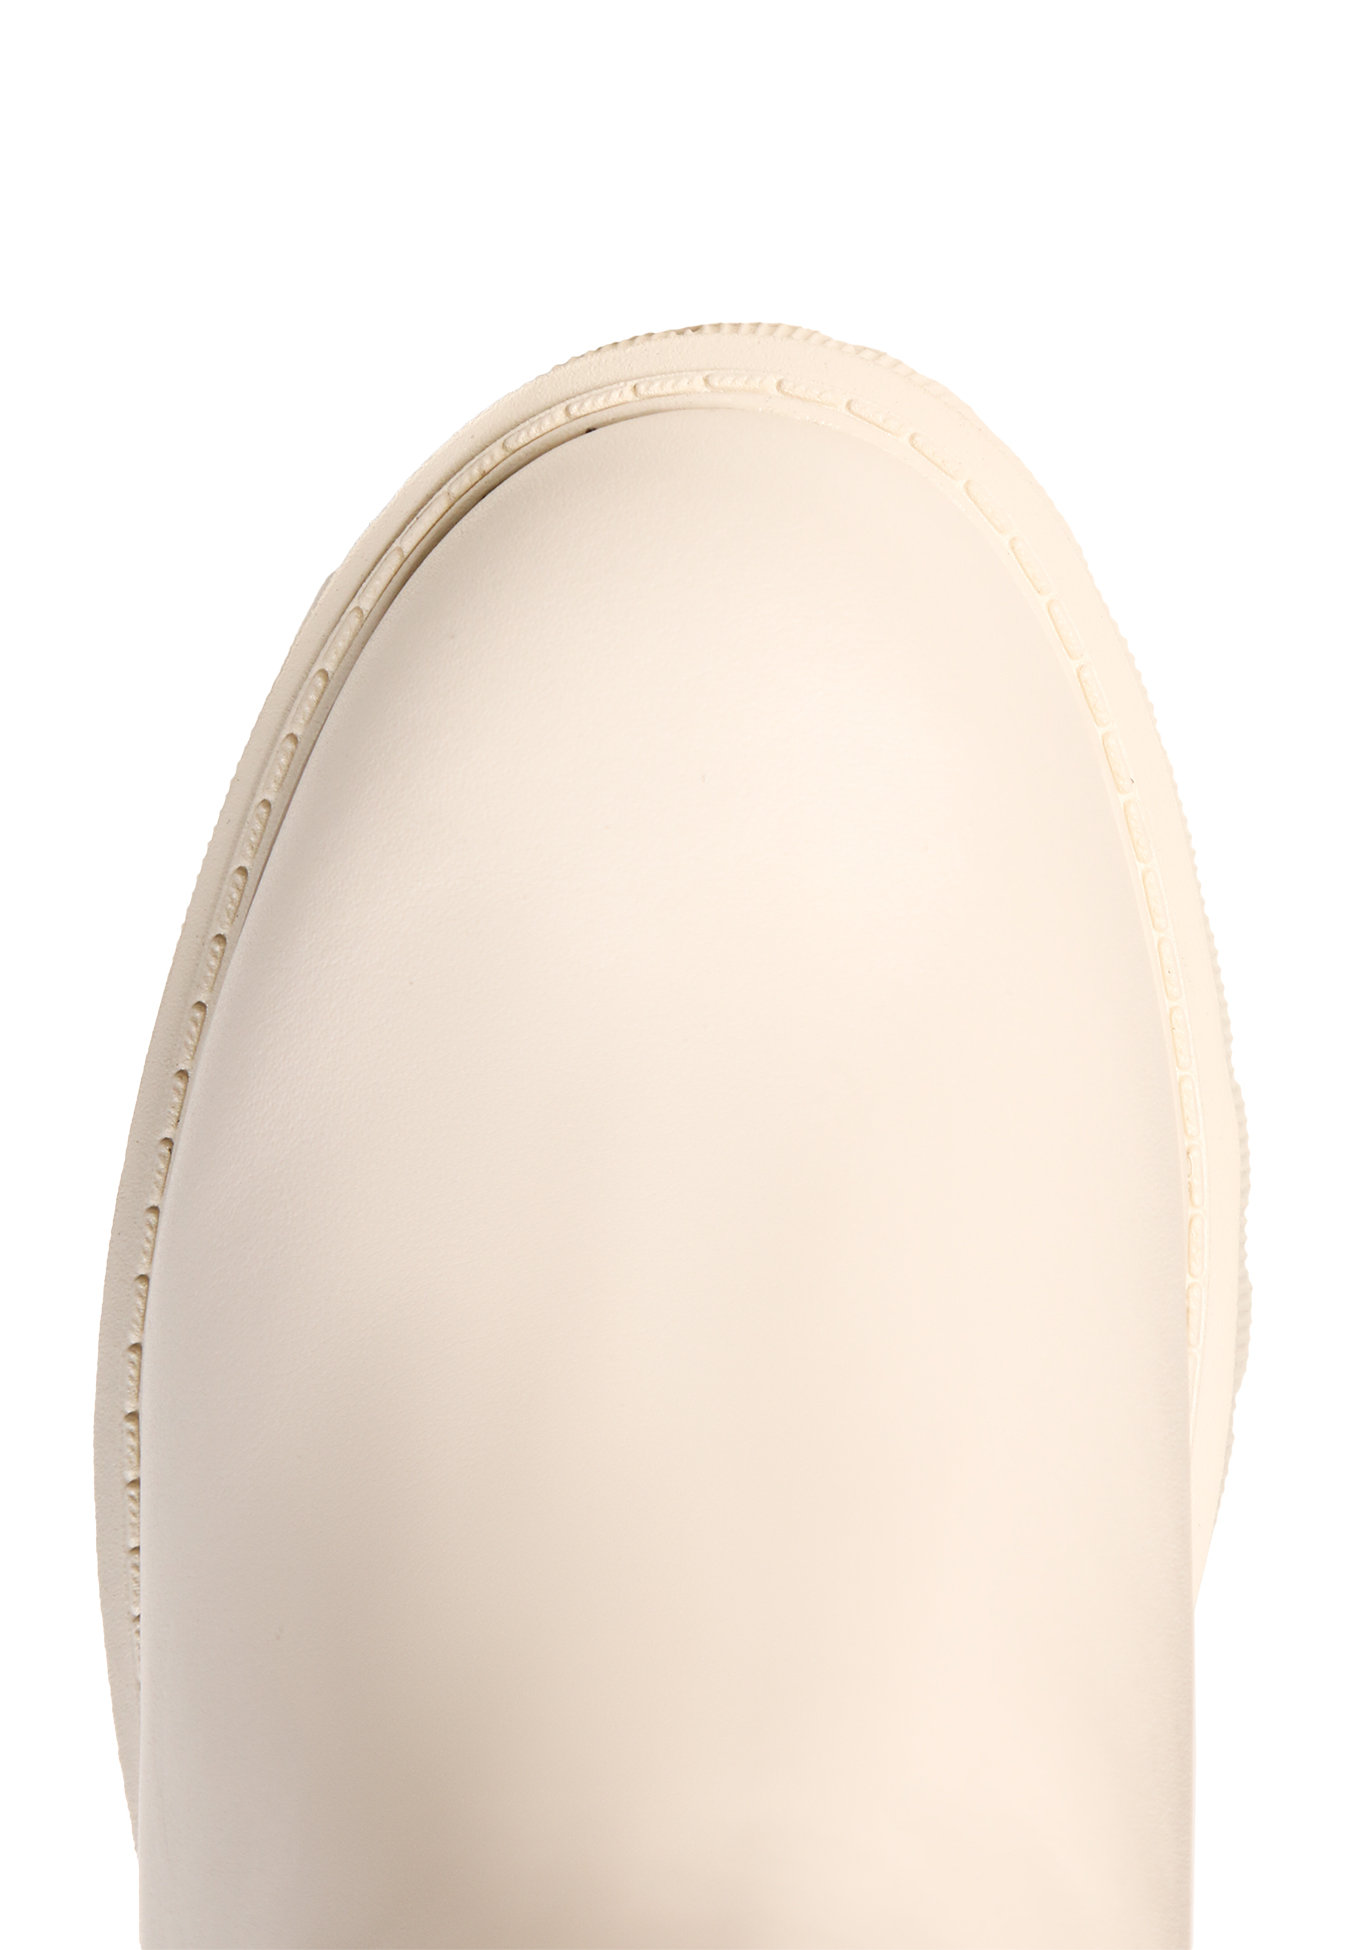 Сапоги женские "Флер" COVANI, размер 36, цвет белый - фото 4